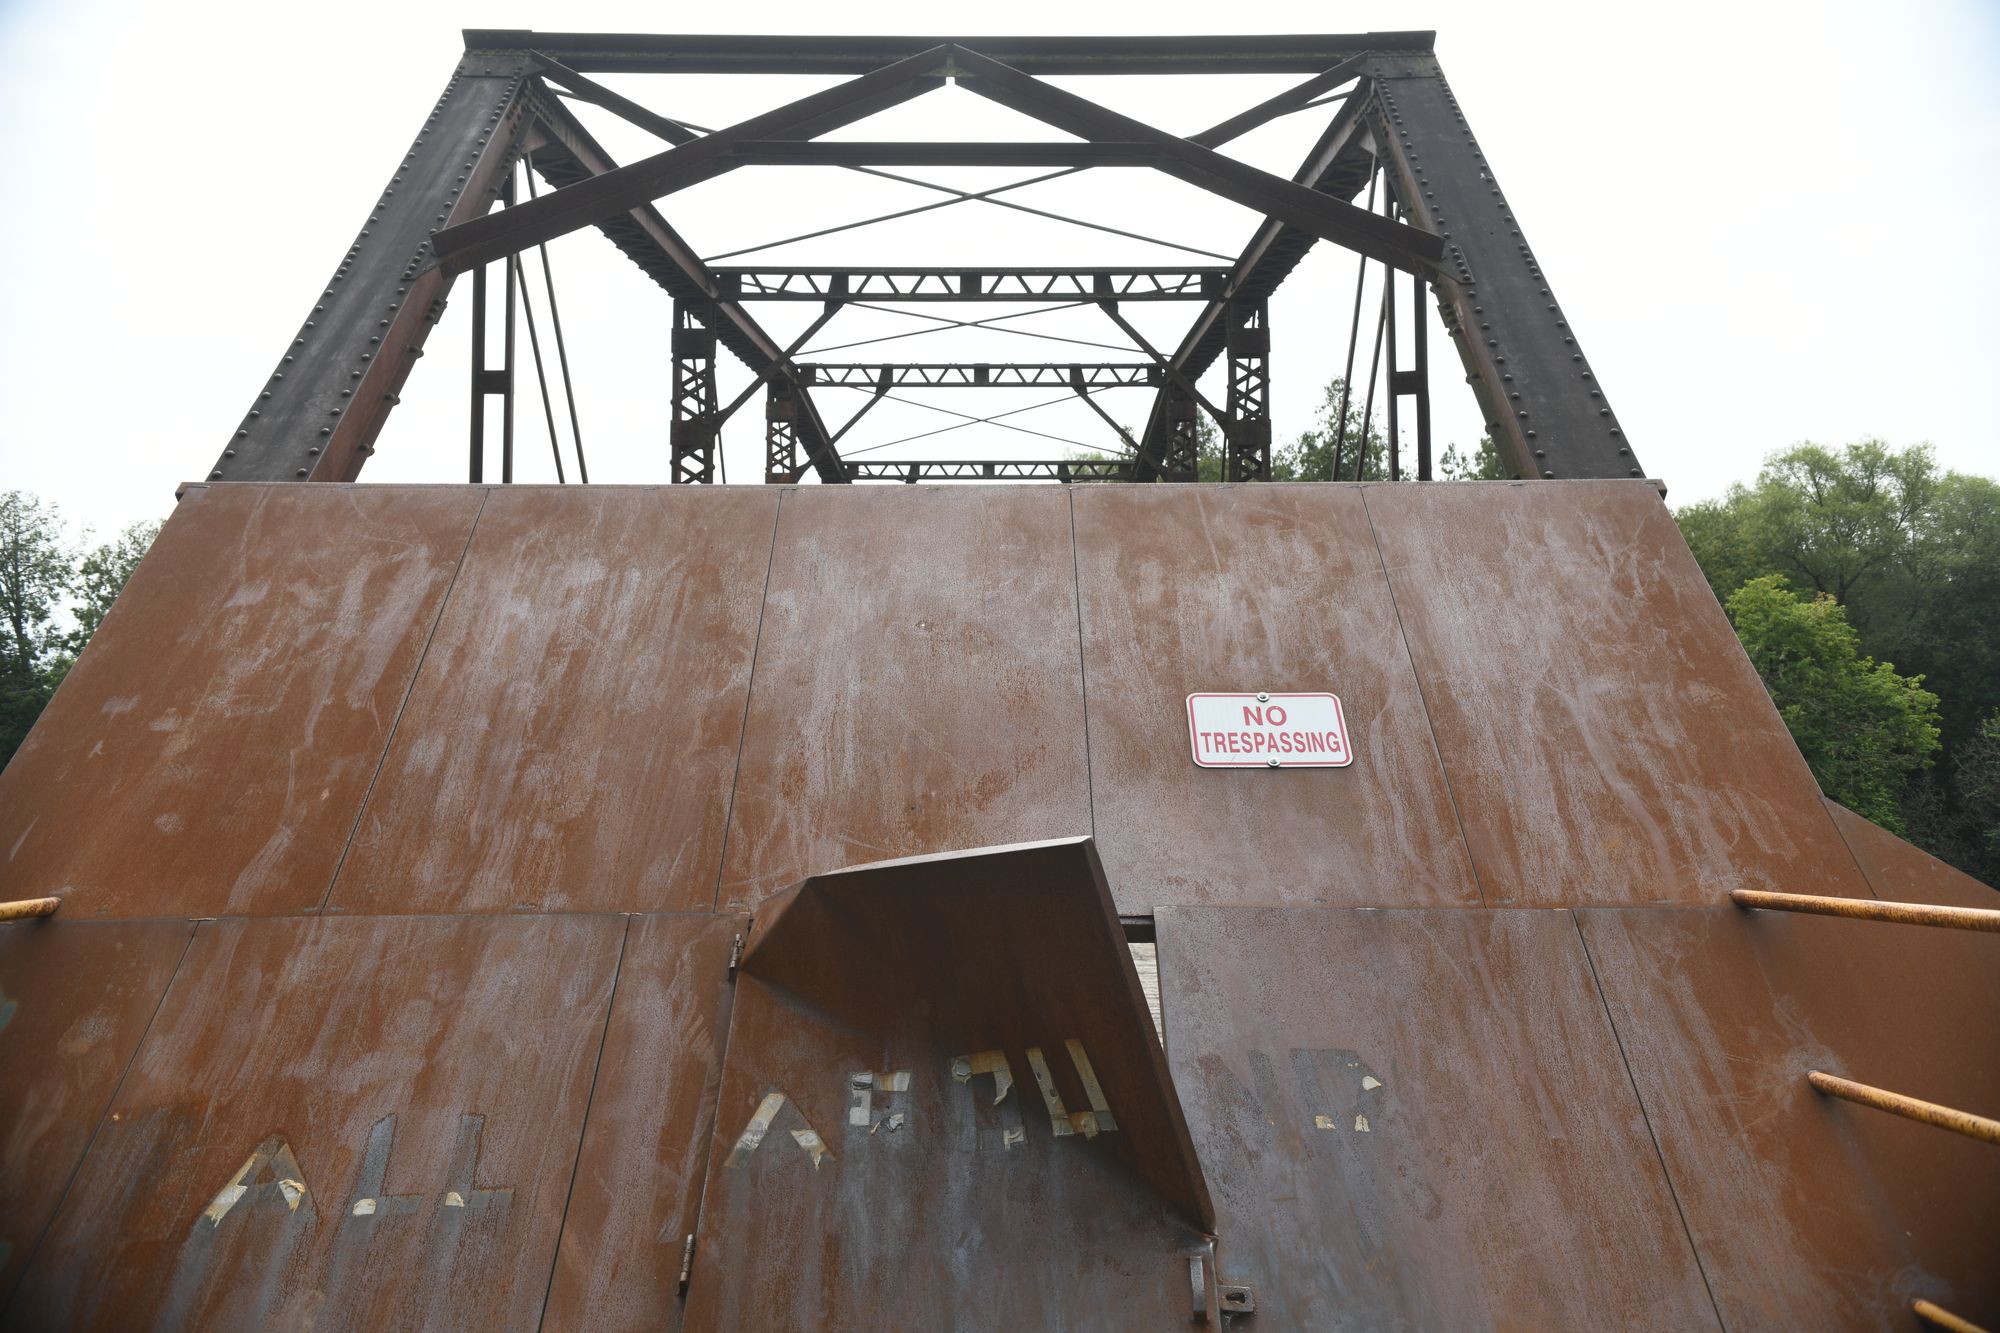                      Middlebrook bridge gets another reprieve                             
                     